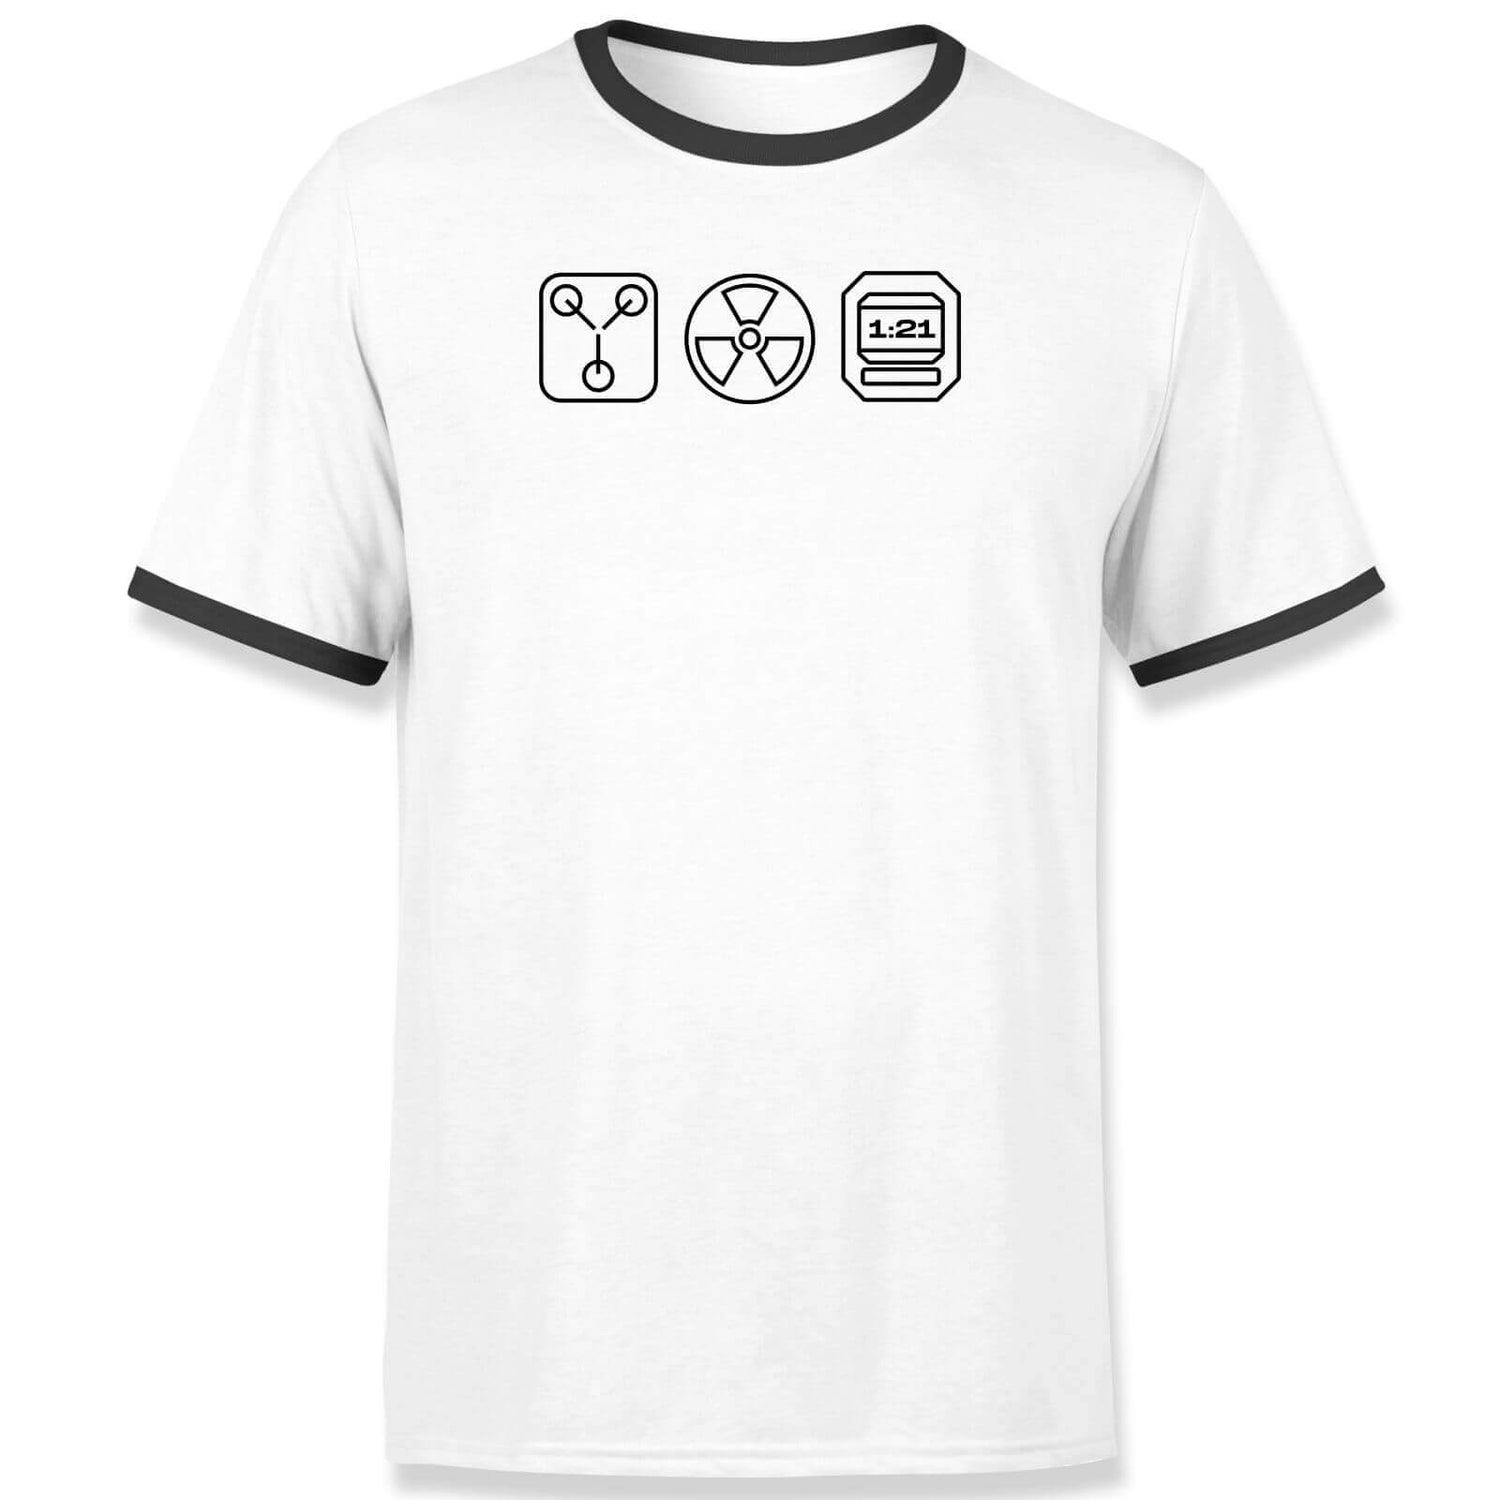 Back To The Future Symbols Embroidered Unisex Ringer T-Shirt - White/Black